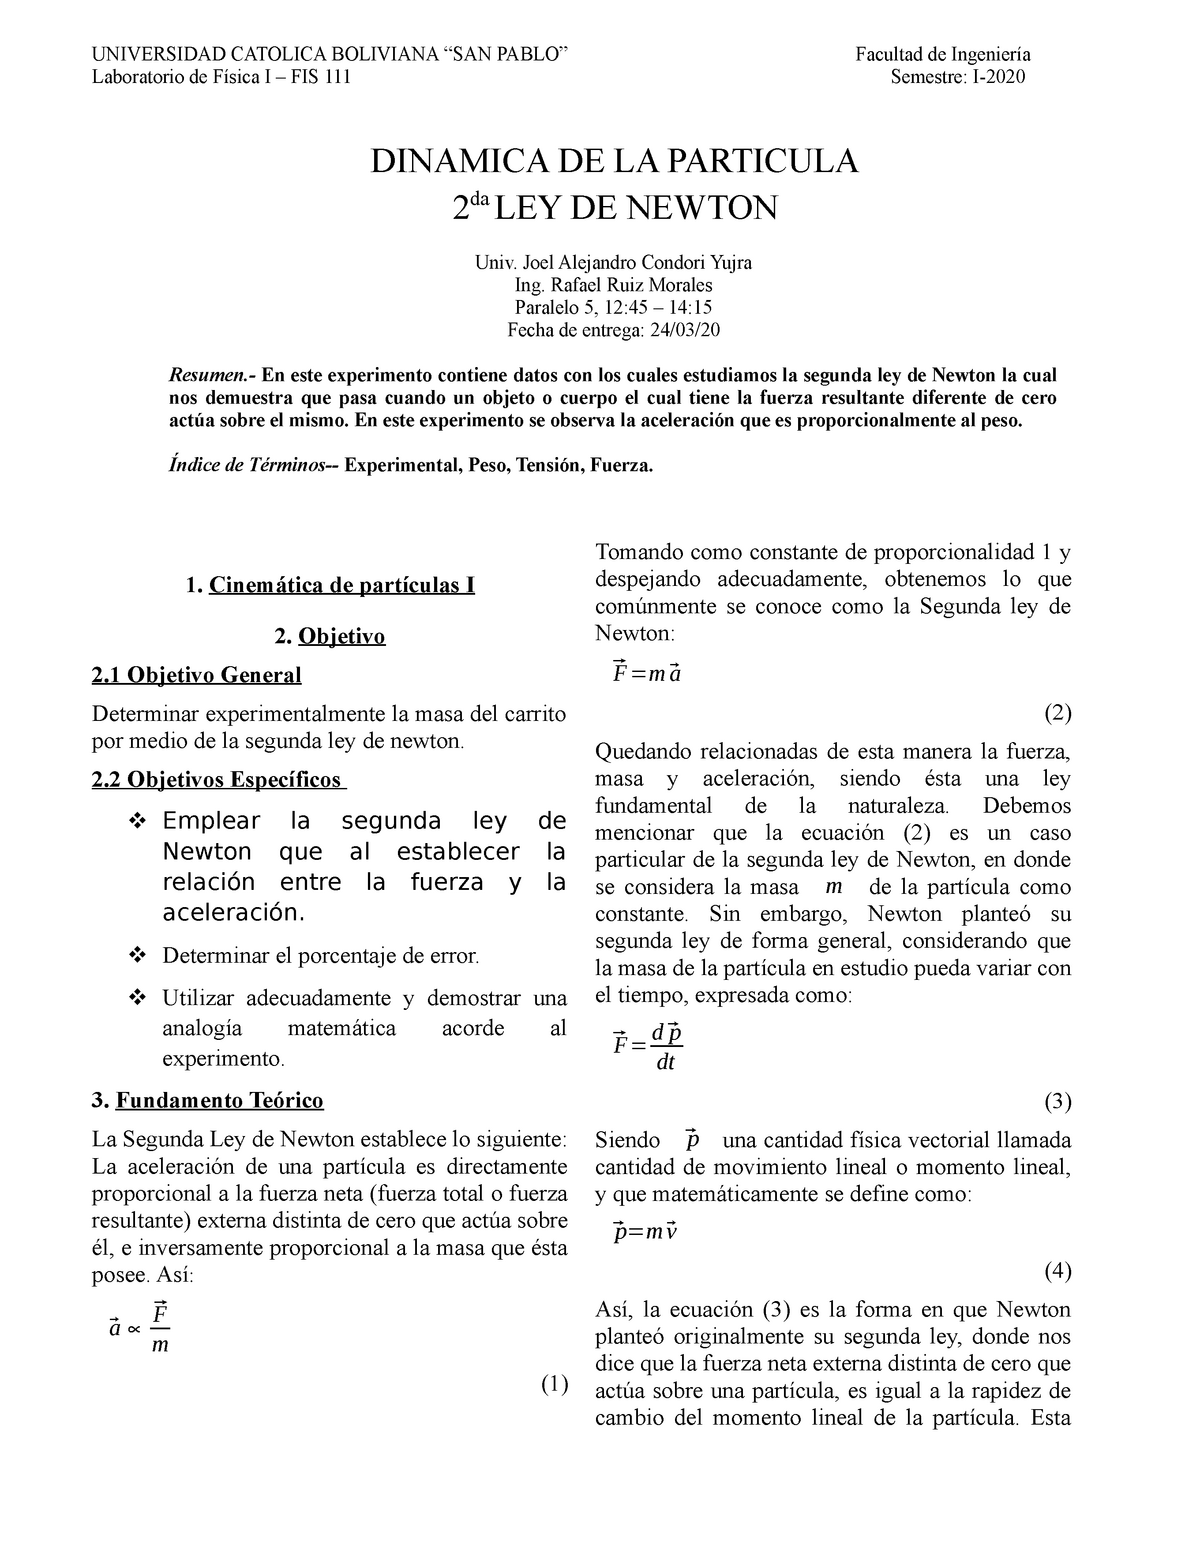 segunda ley de newton - 2 Objetivos Específicos  Emplear la segunda ley de  Newton que al establecer - Studocu